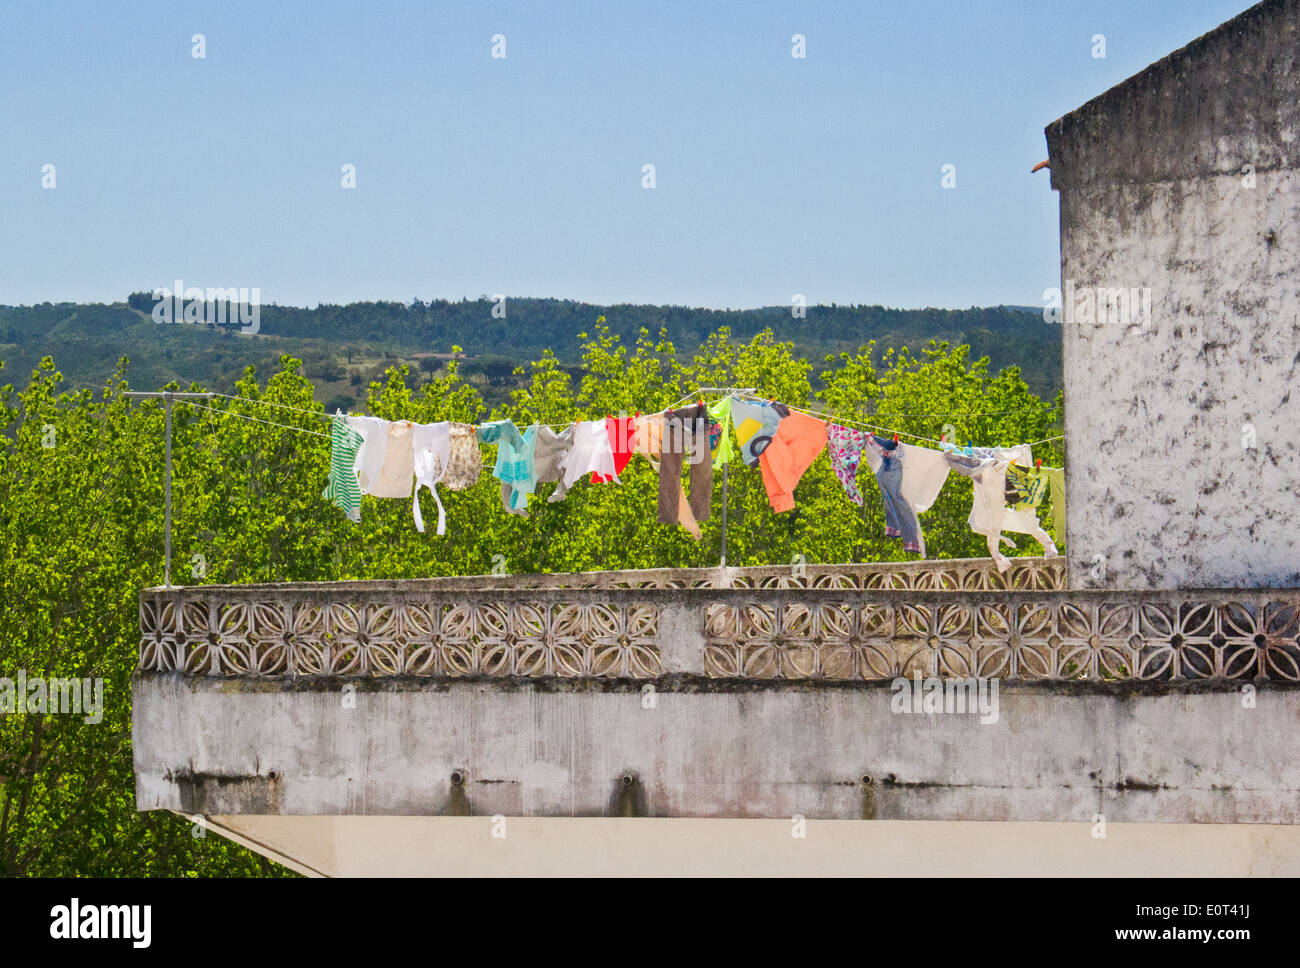 Clothesline with laundry on a balcony Stock Photo